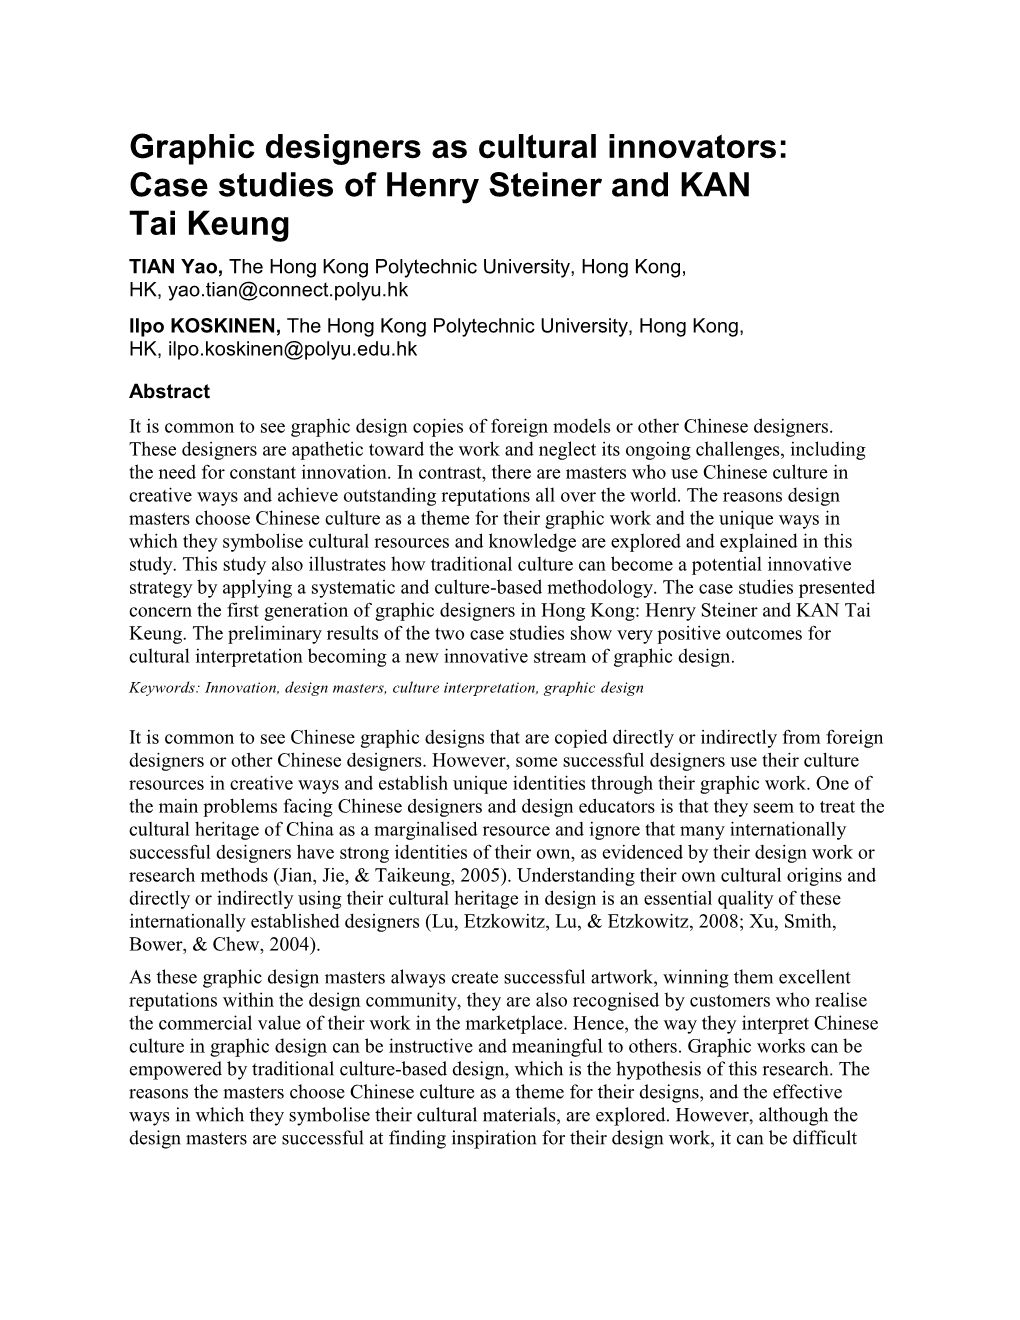 Case Studies of Henry Steiner and KAN Tai Keung